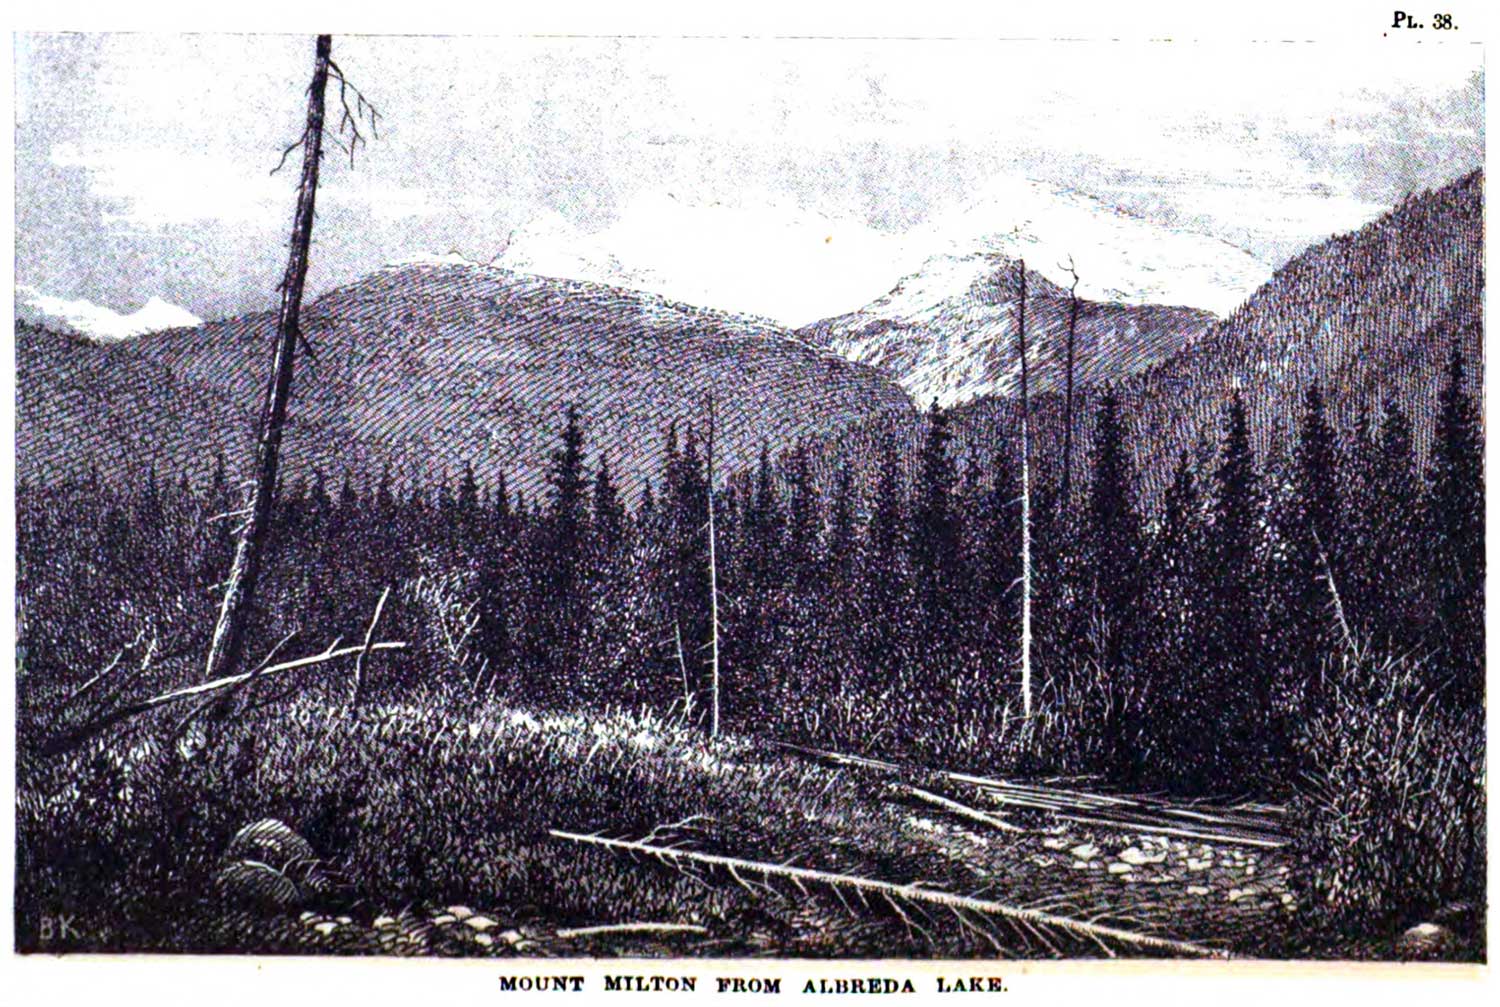 Mount Milton from Albreda Lake. George Monro Grant, plate 38